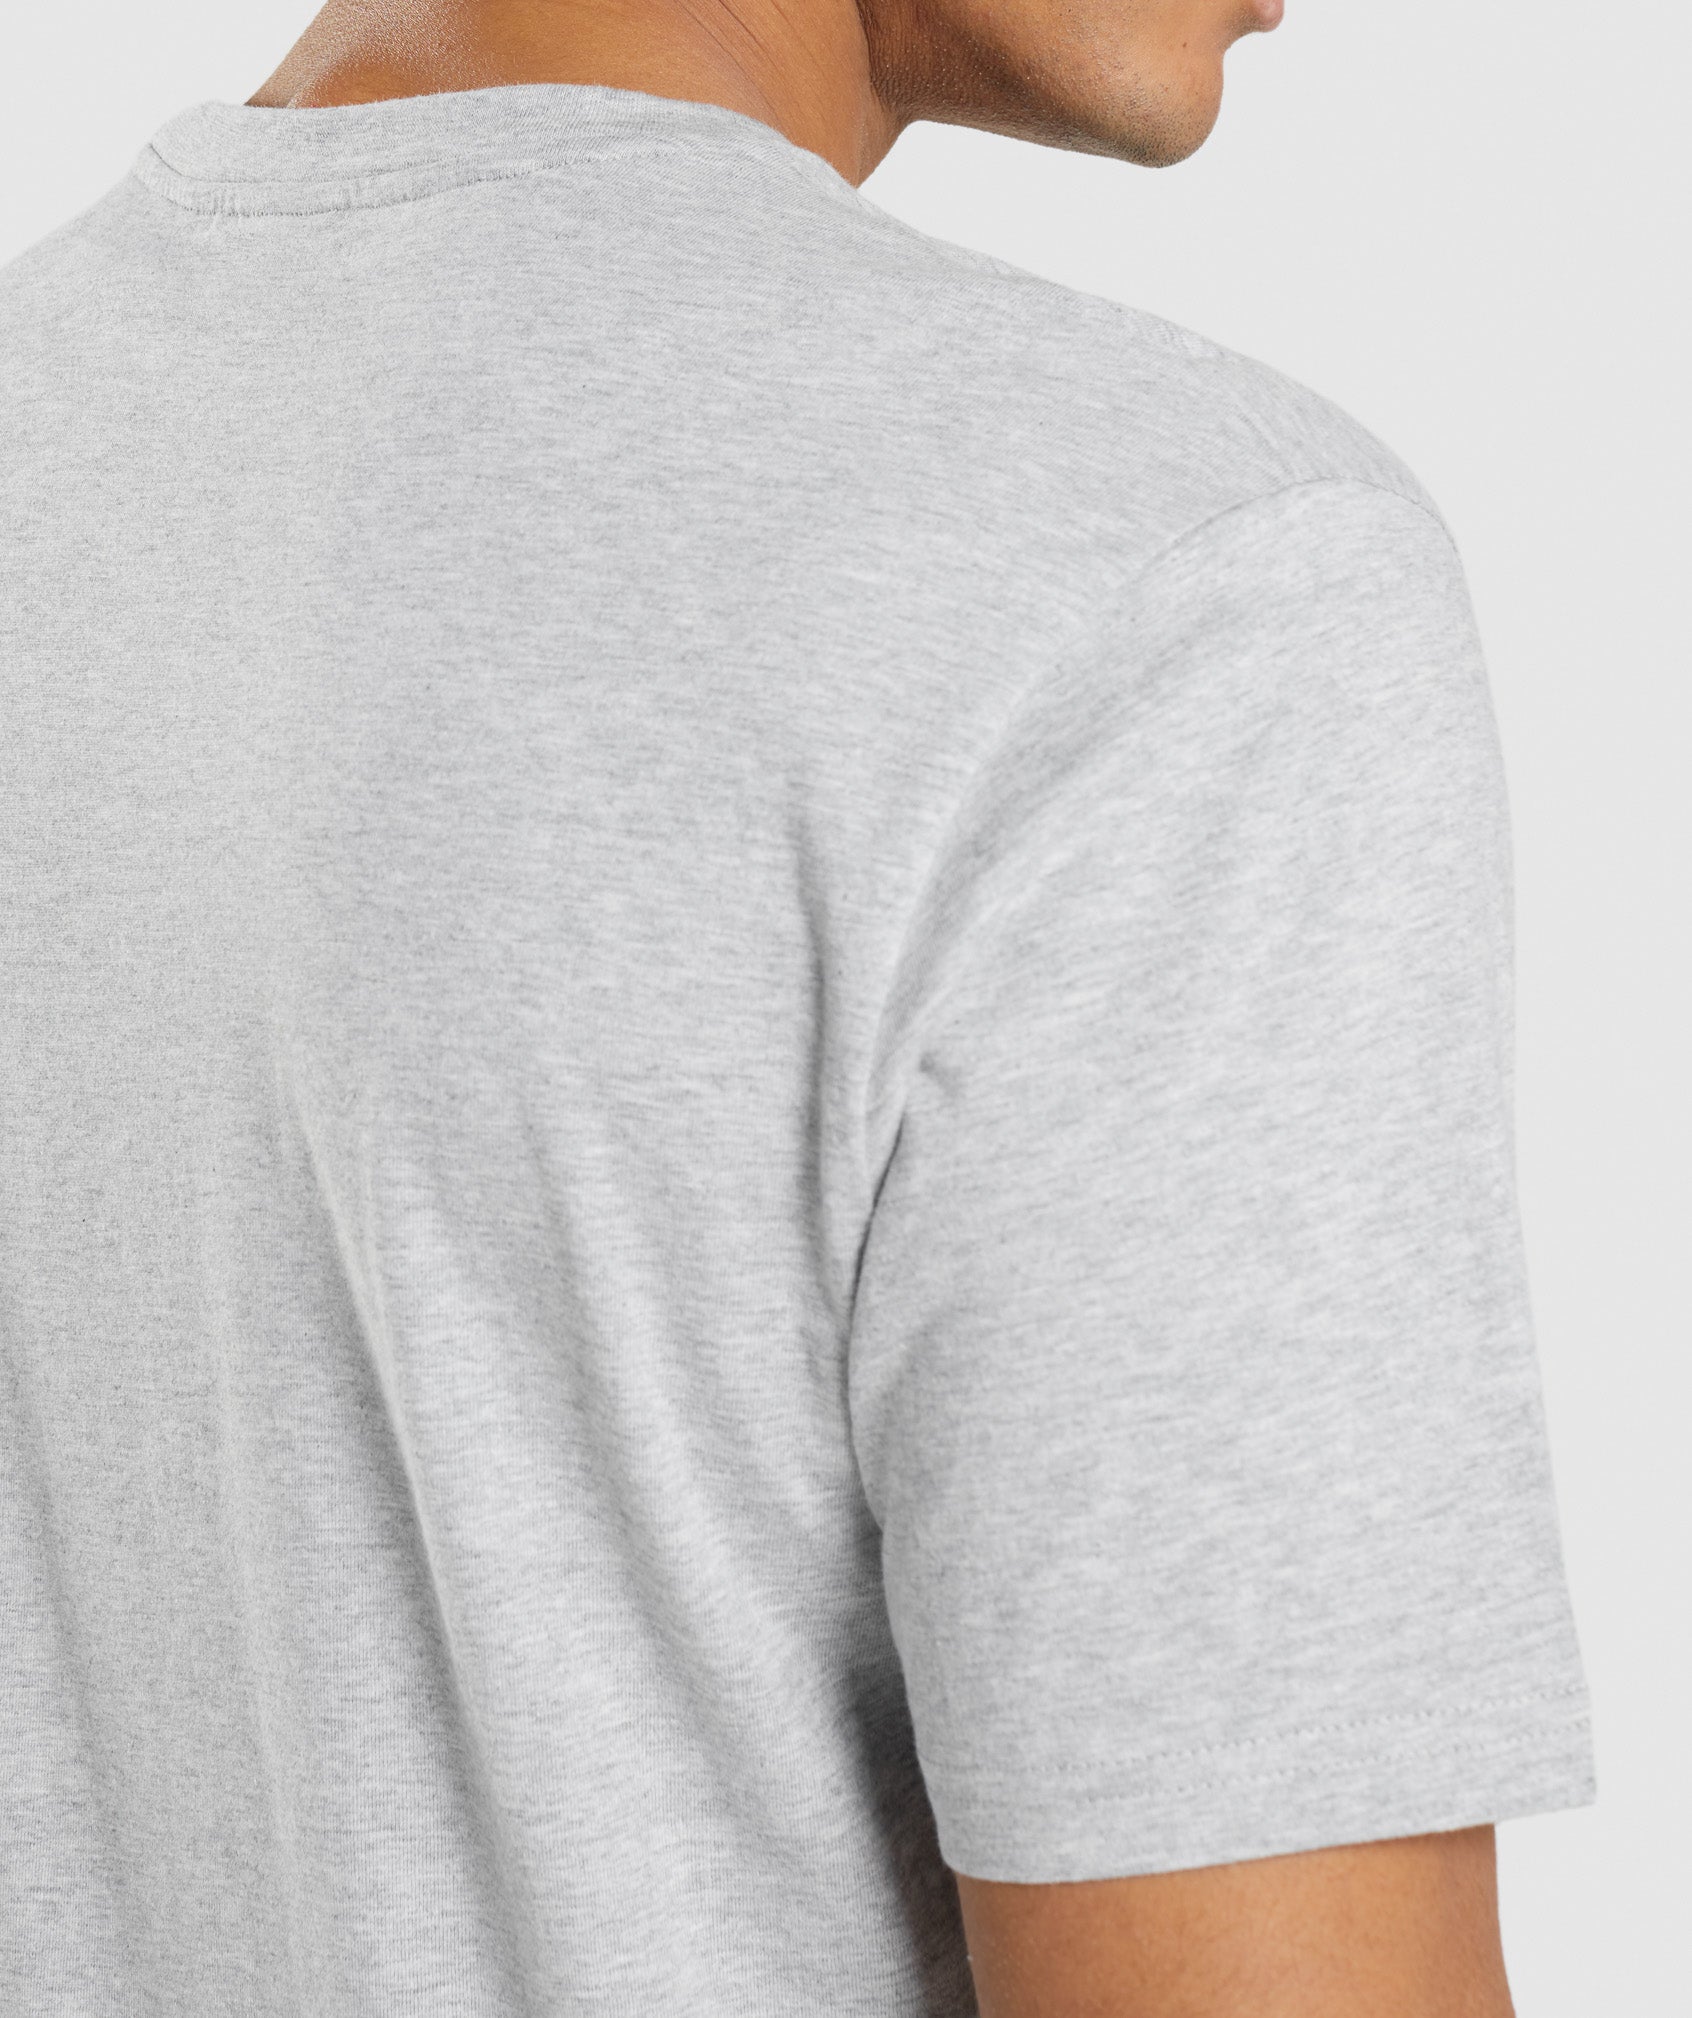 Crest T-Shirt in Light Grey Marl